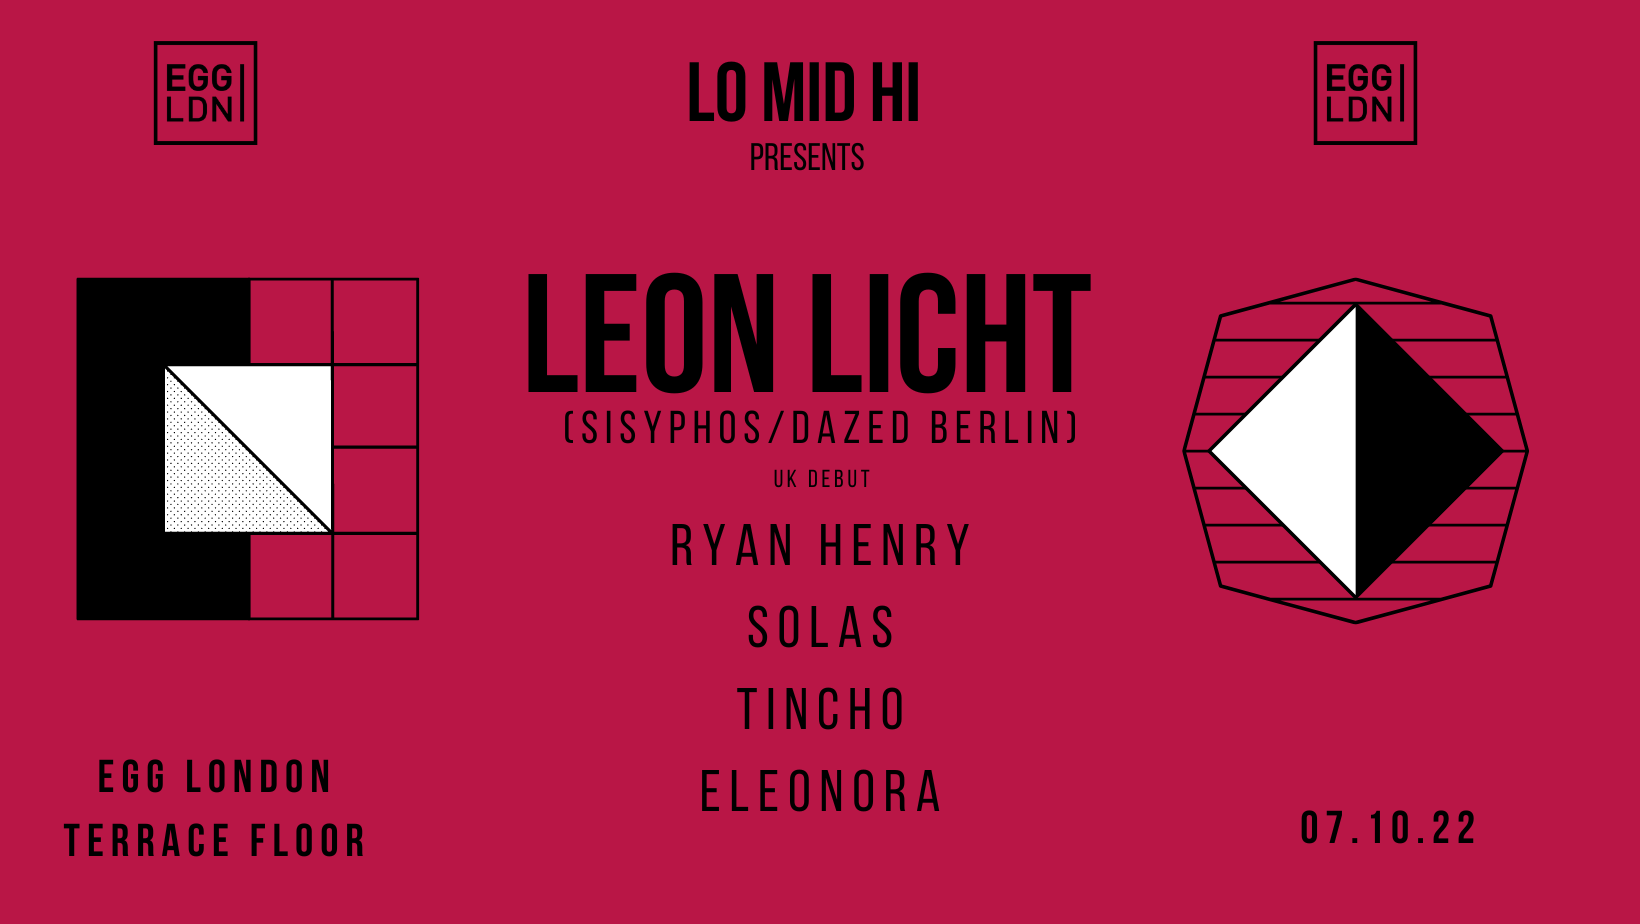 Fridays at EGG: LO MID HI presents - Leon Licht, Ryan Henry, Solas, Tincho & Eleonora - フライヤー表